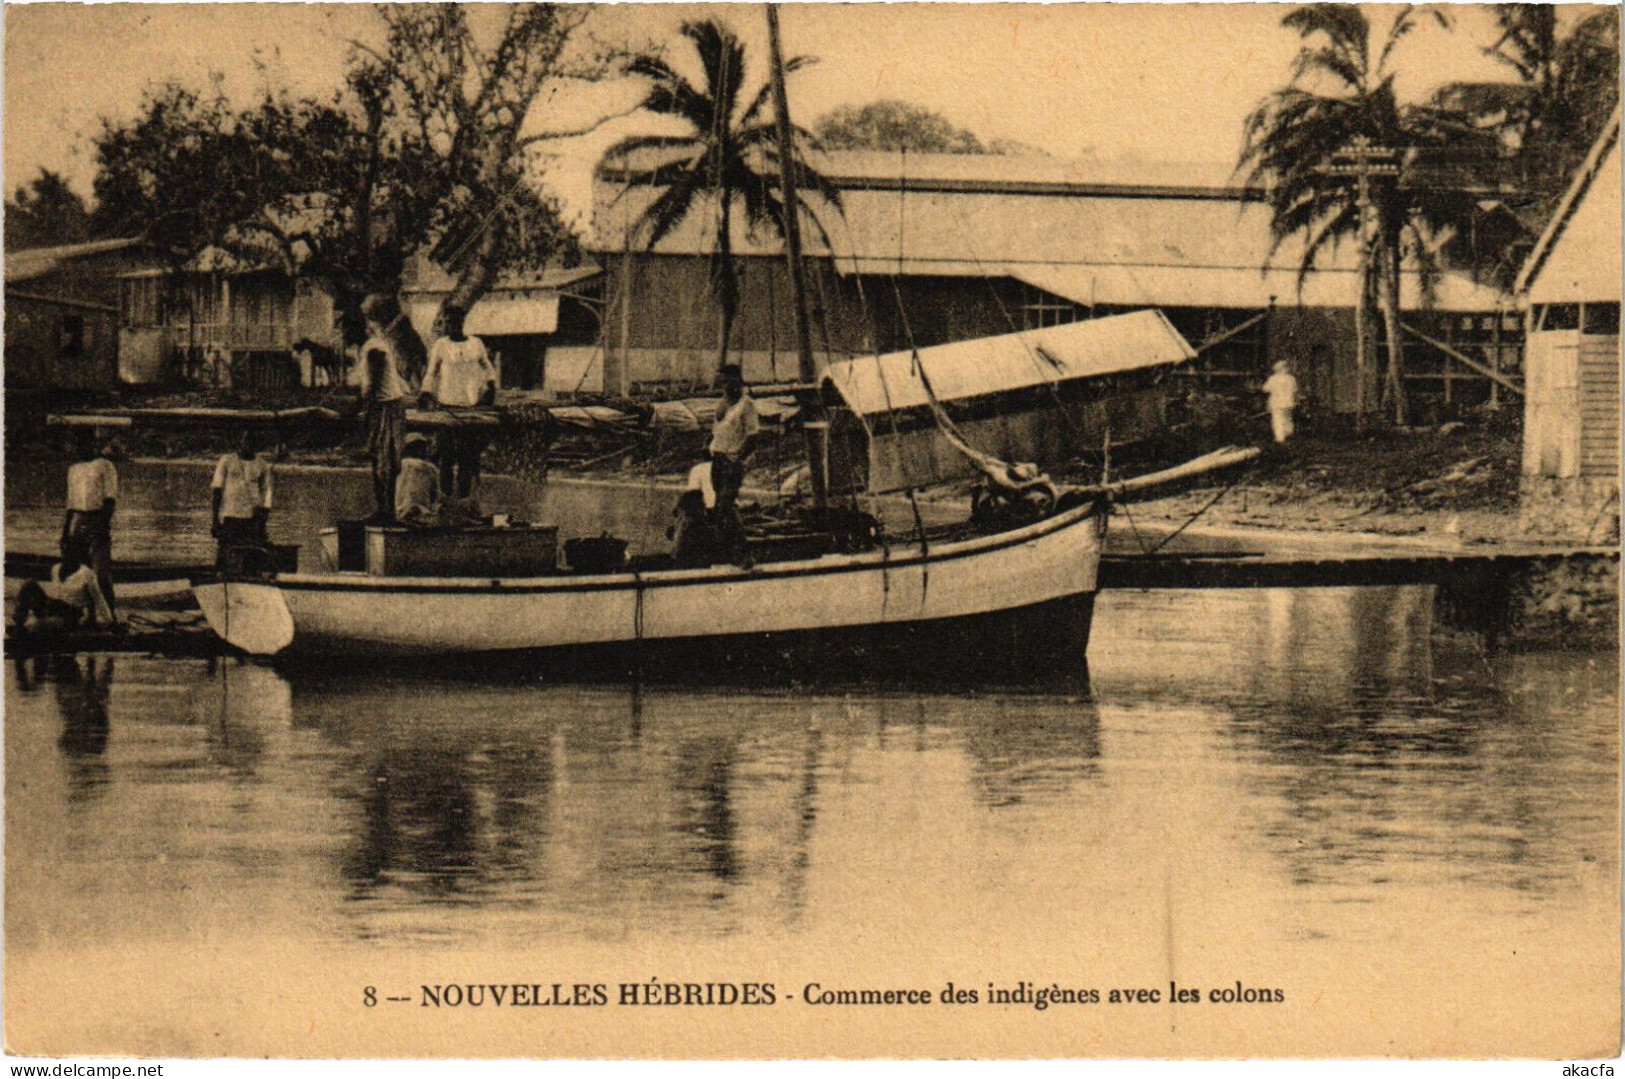 PC NEW HEBRIDES, COMMERCE DES INDIGÉNES, Vintage Postcard (b53550) - Vanuatu